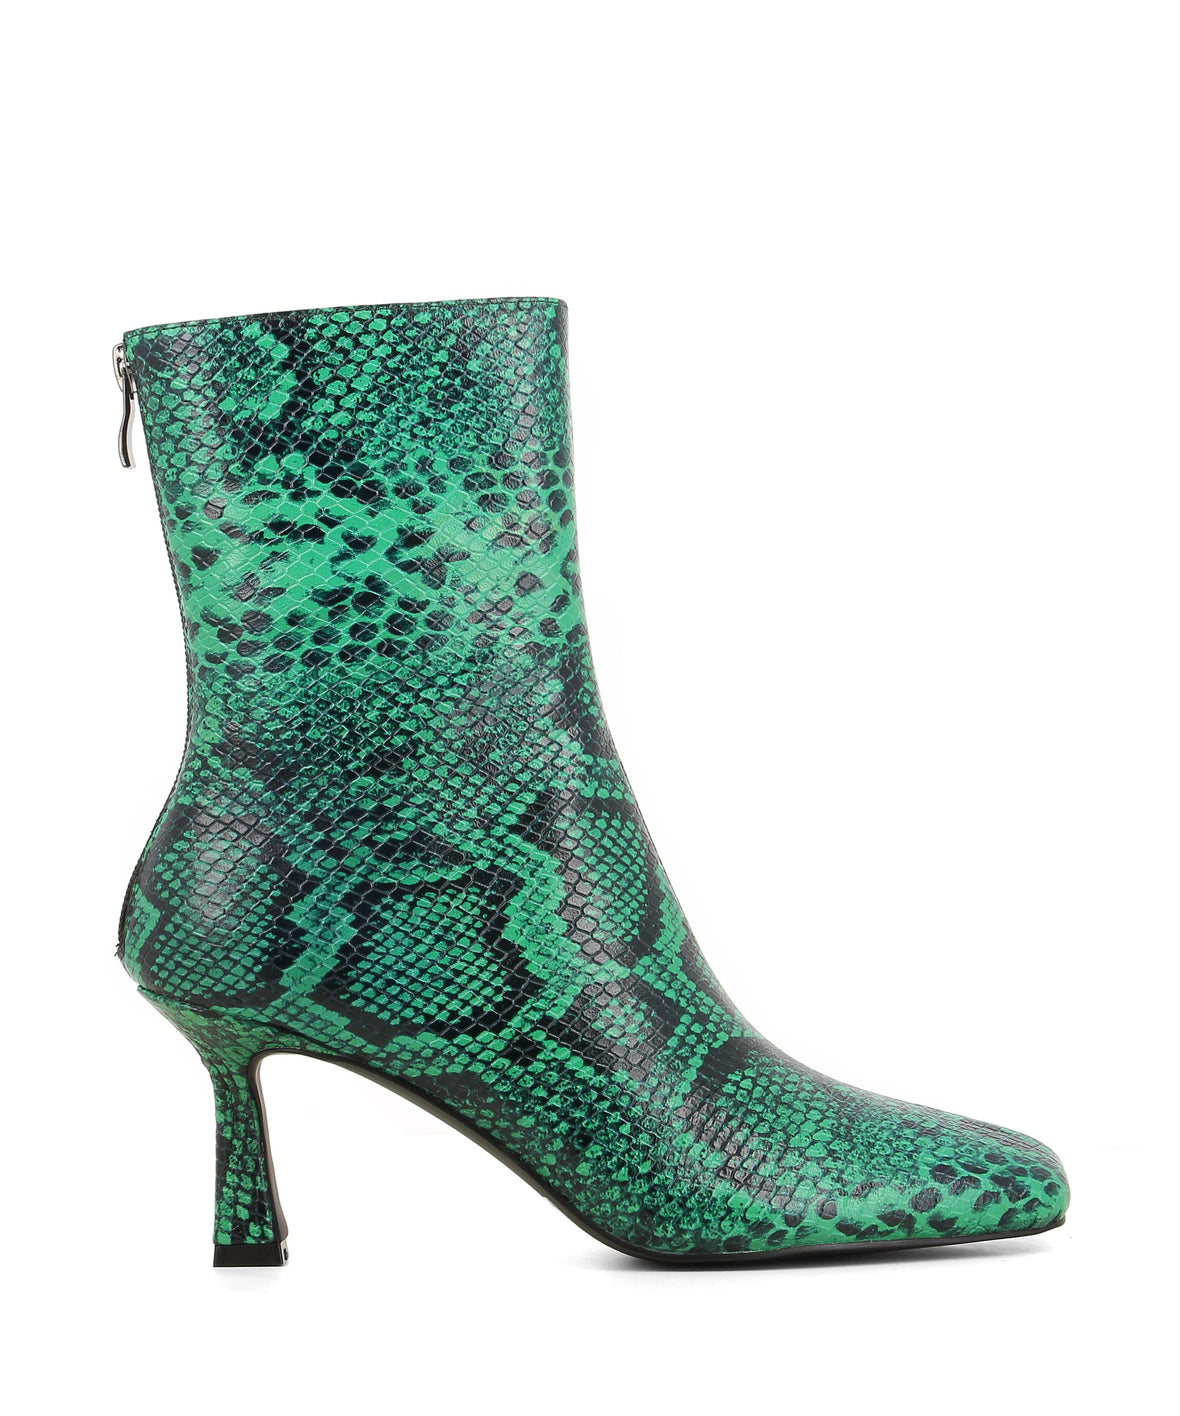 green snake skin boots